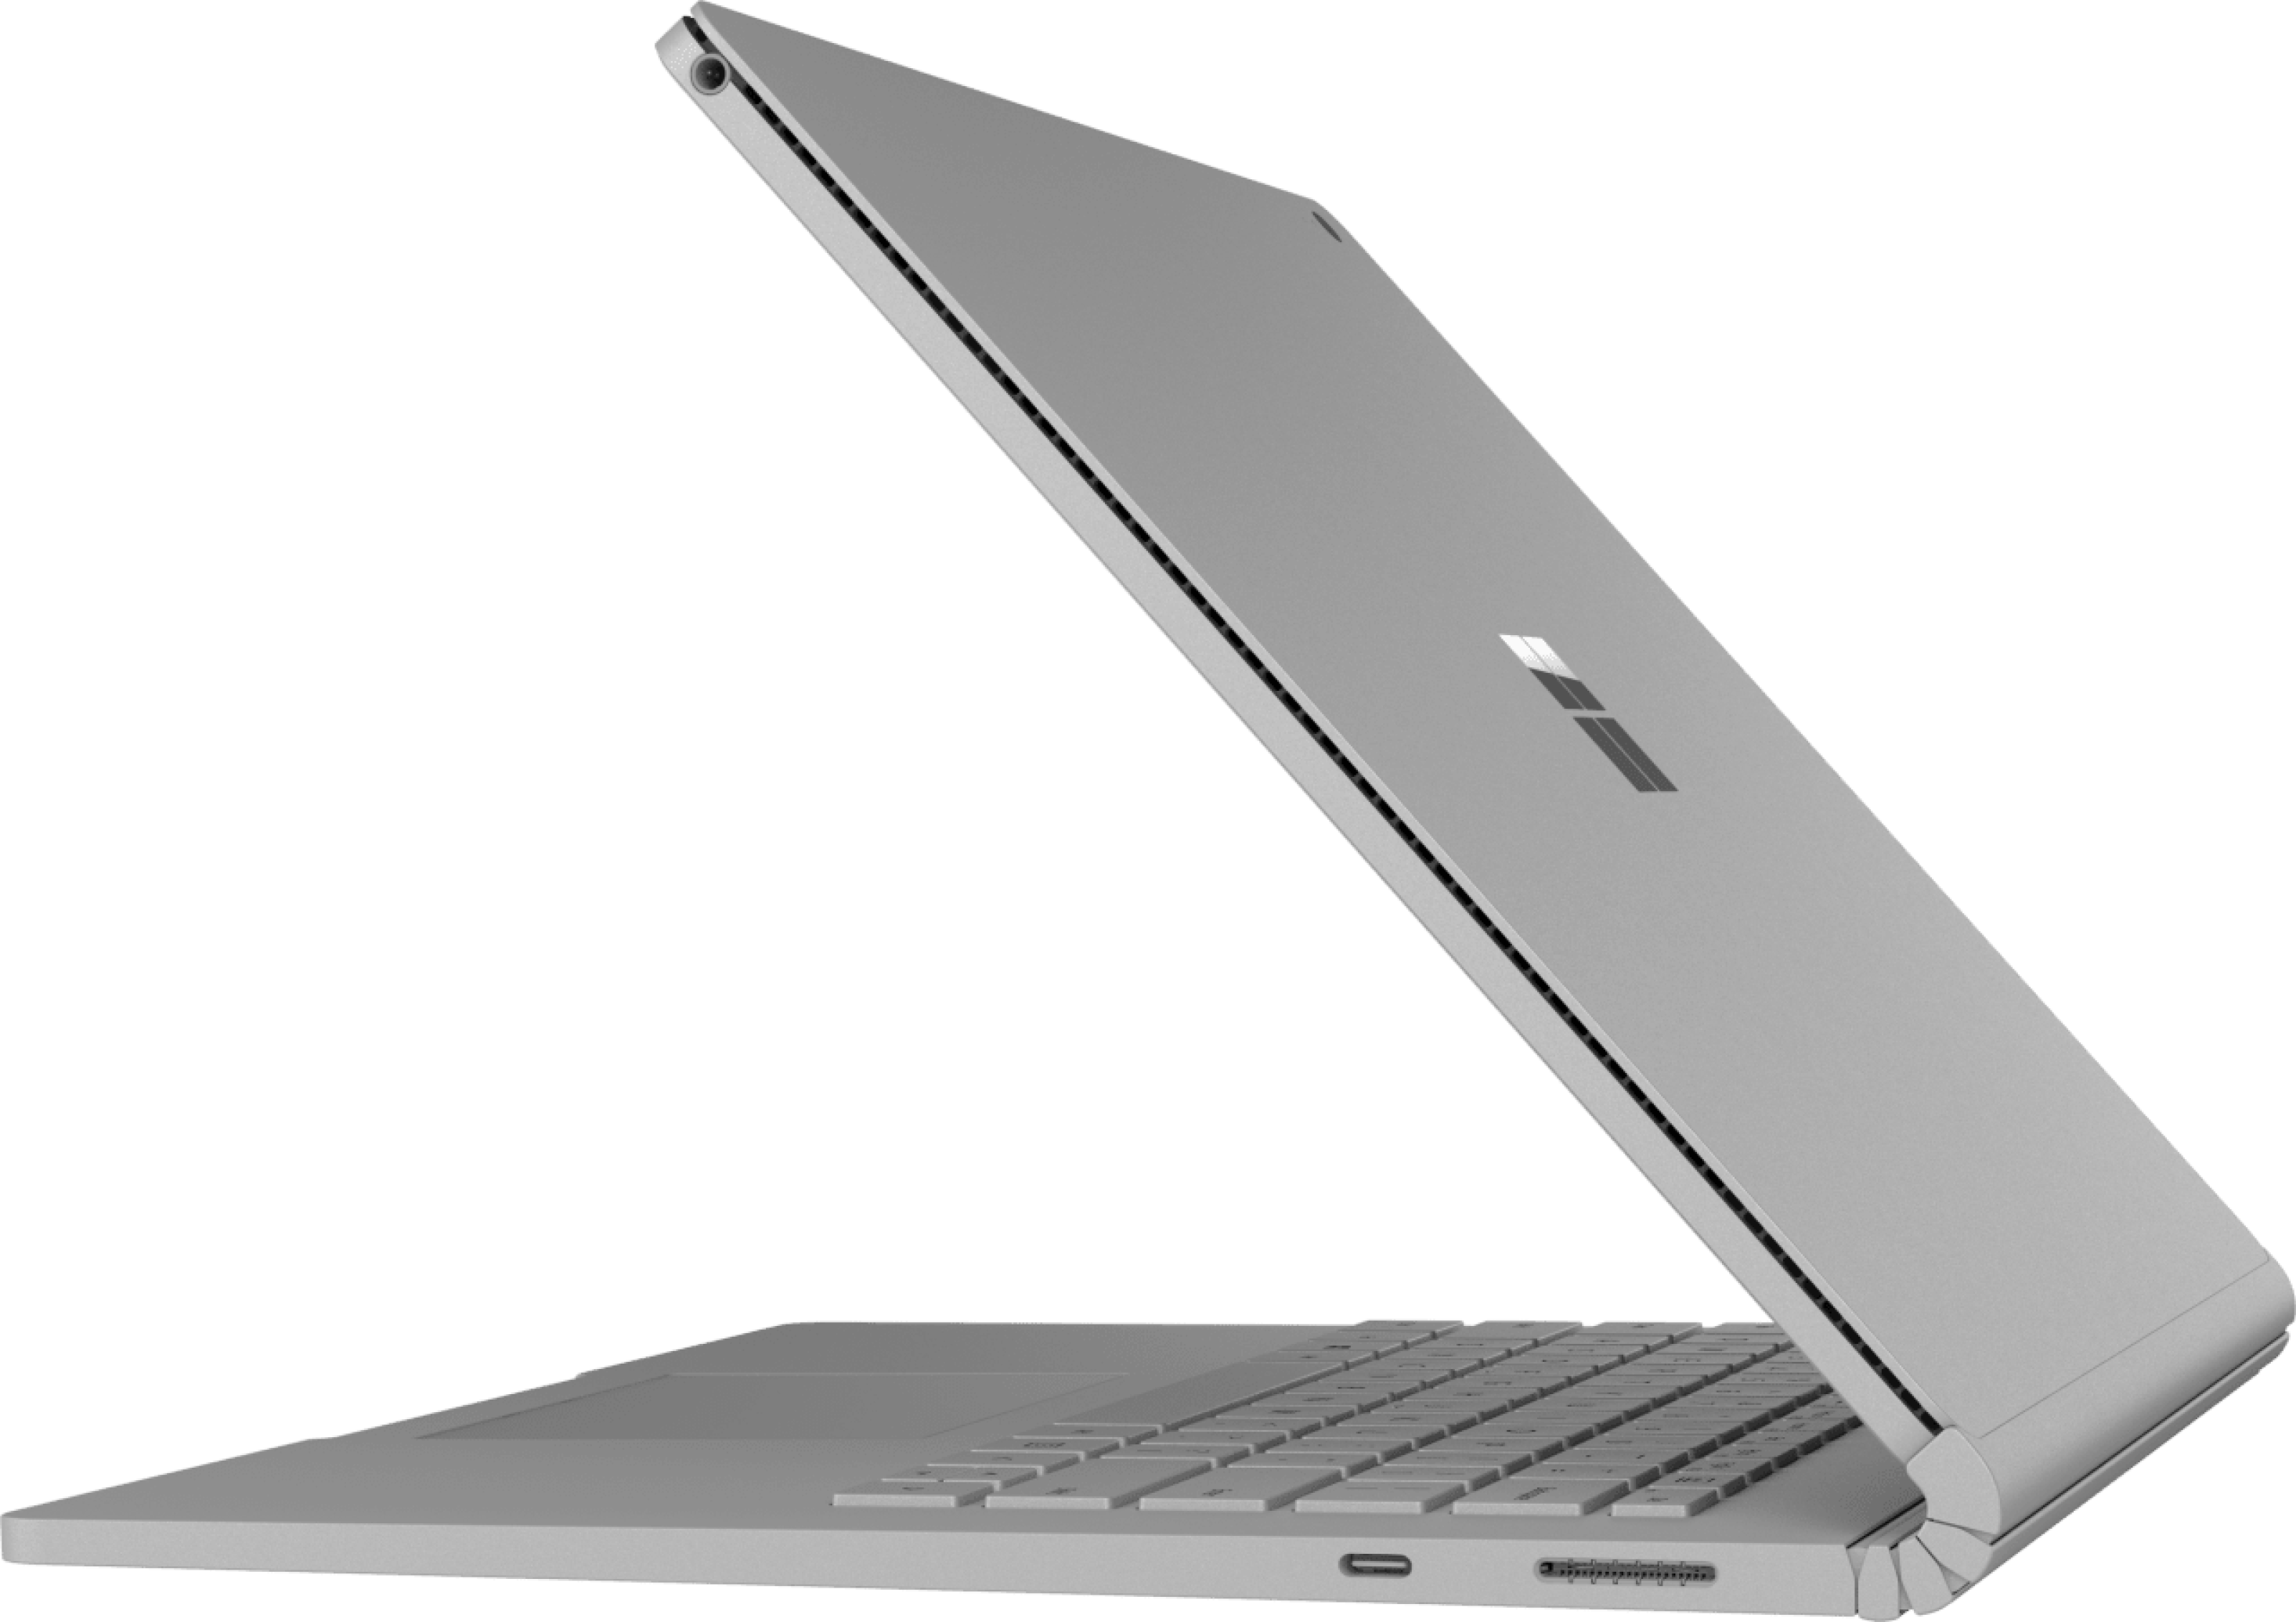  Microsoft surface Book 2 خرید مشخصات و قیمت لپ تاپ استوک سرفیس با گرافیک مجزا| لپ تاپ استوک اروپایی مایکروسافت سرفیس بوک 